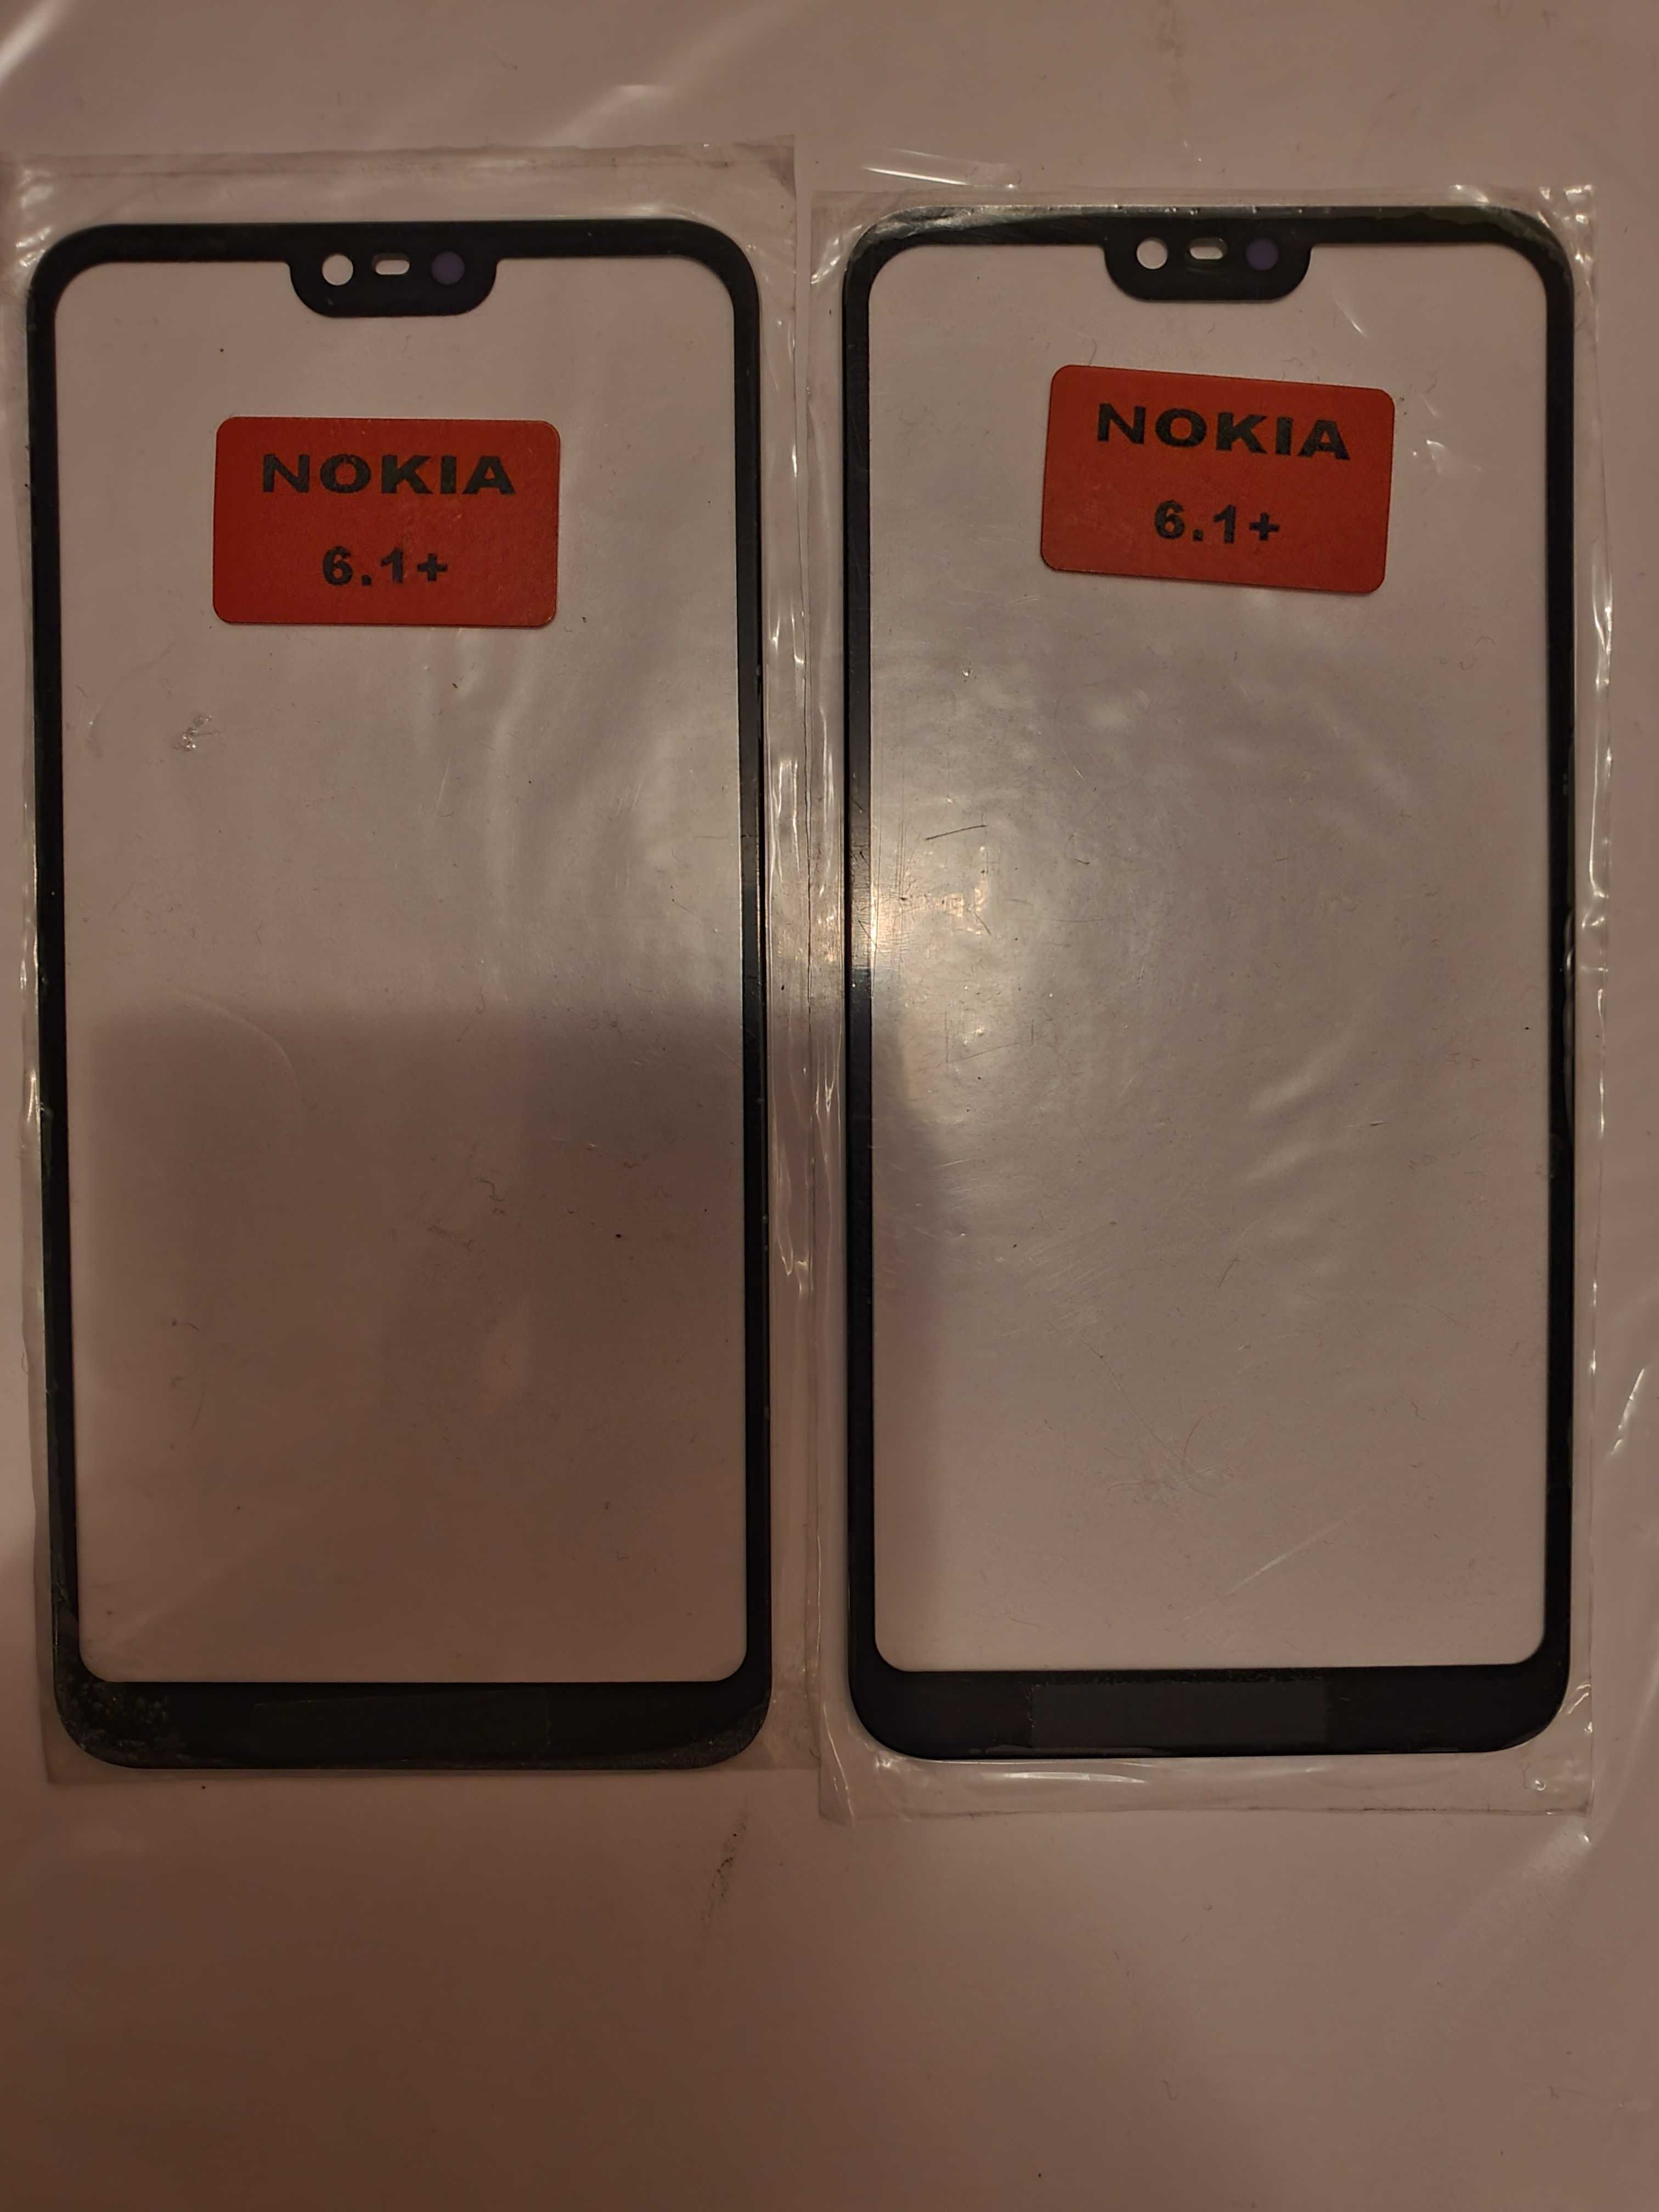 Nokia 6.1+ sensr steklosi (sensrini alohida olasila)